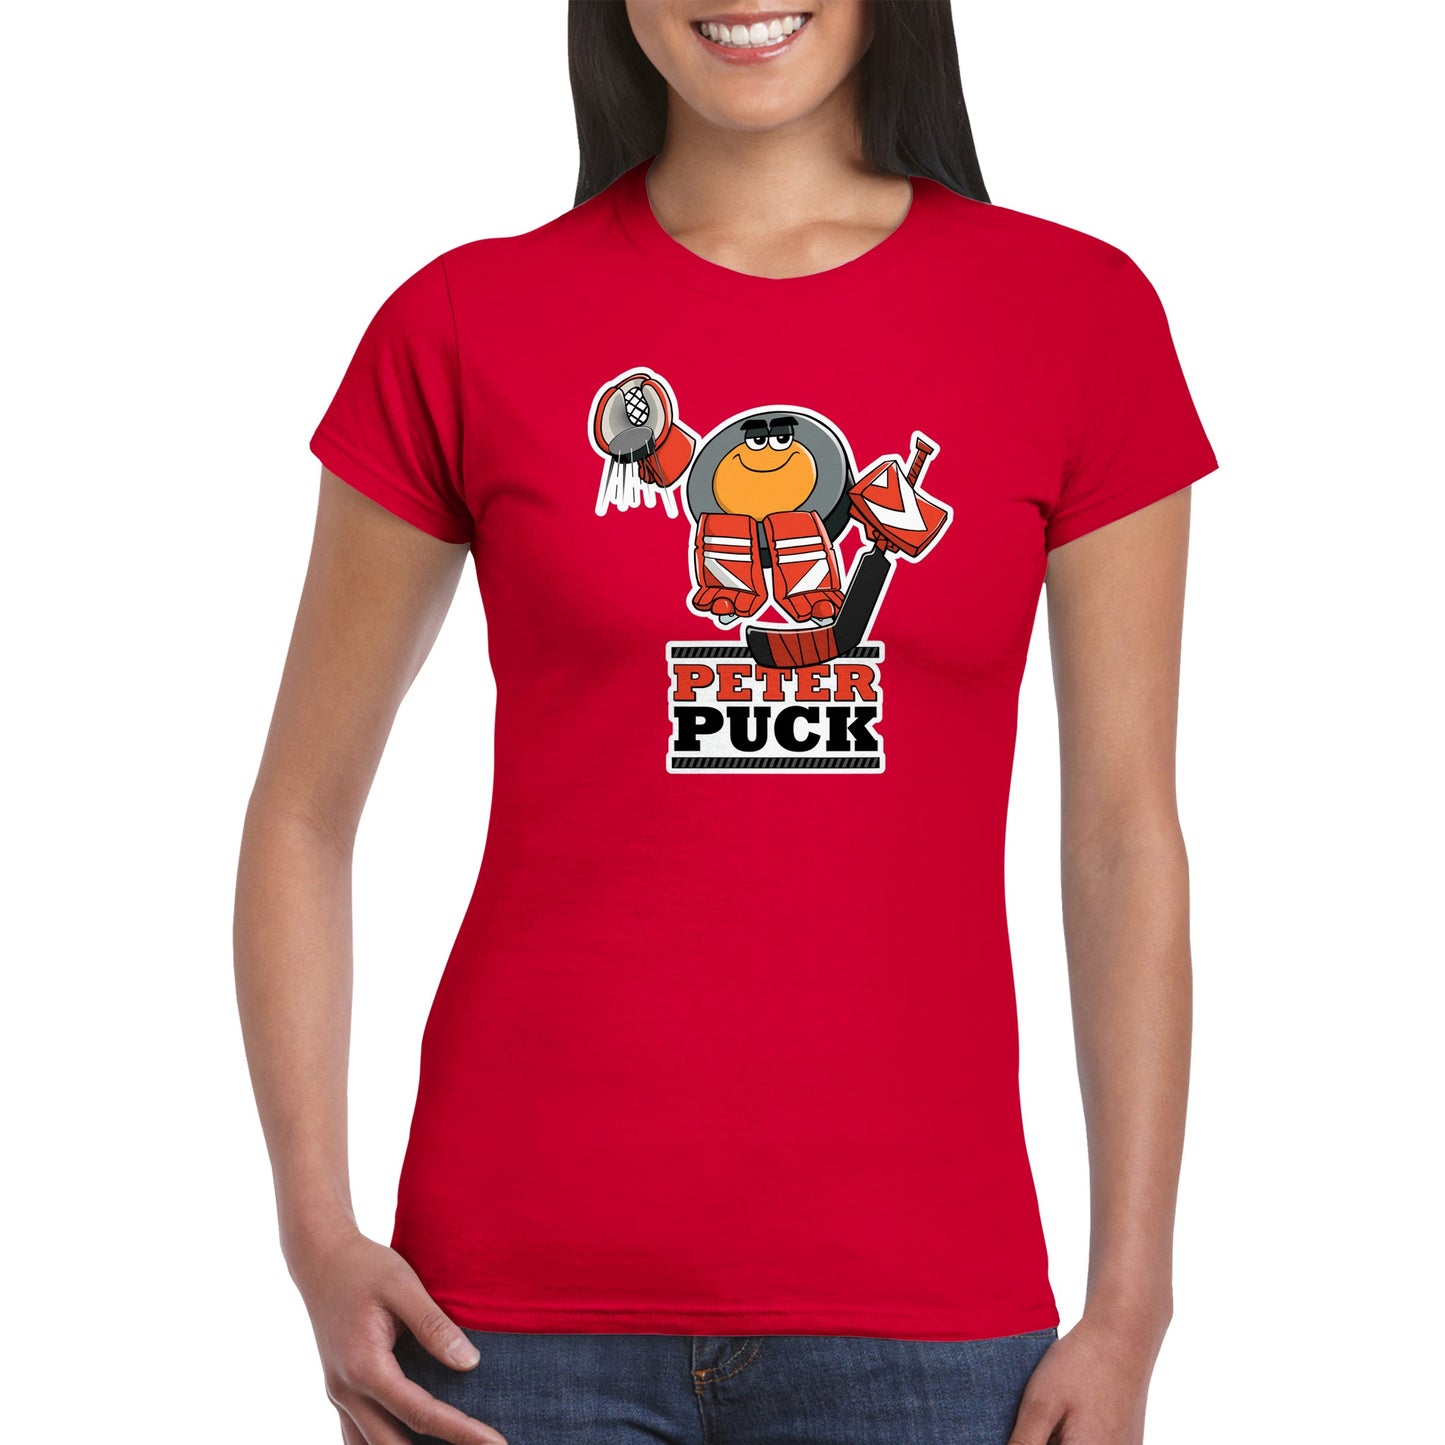 Peter Puck Plays Goalie Classic Womens Crewneck T-shirt